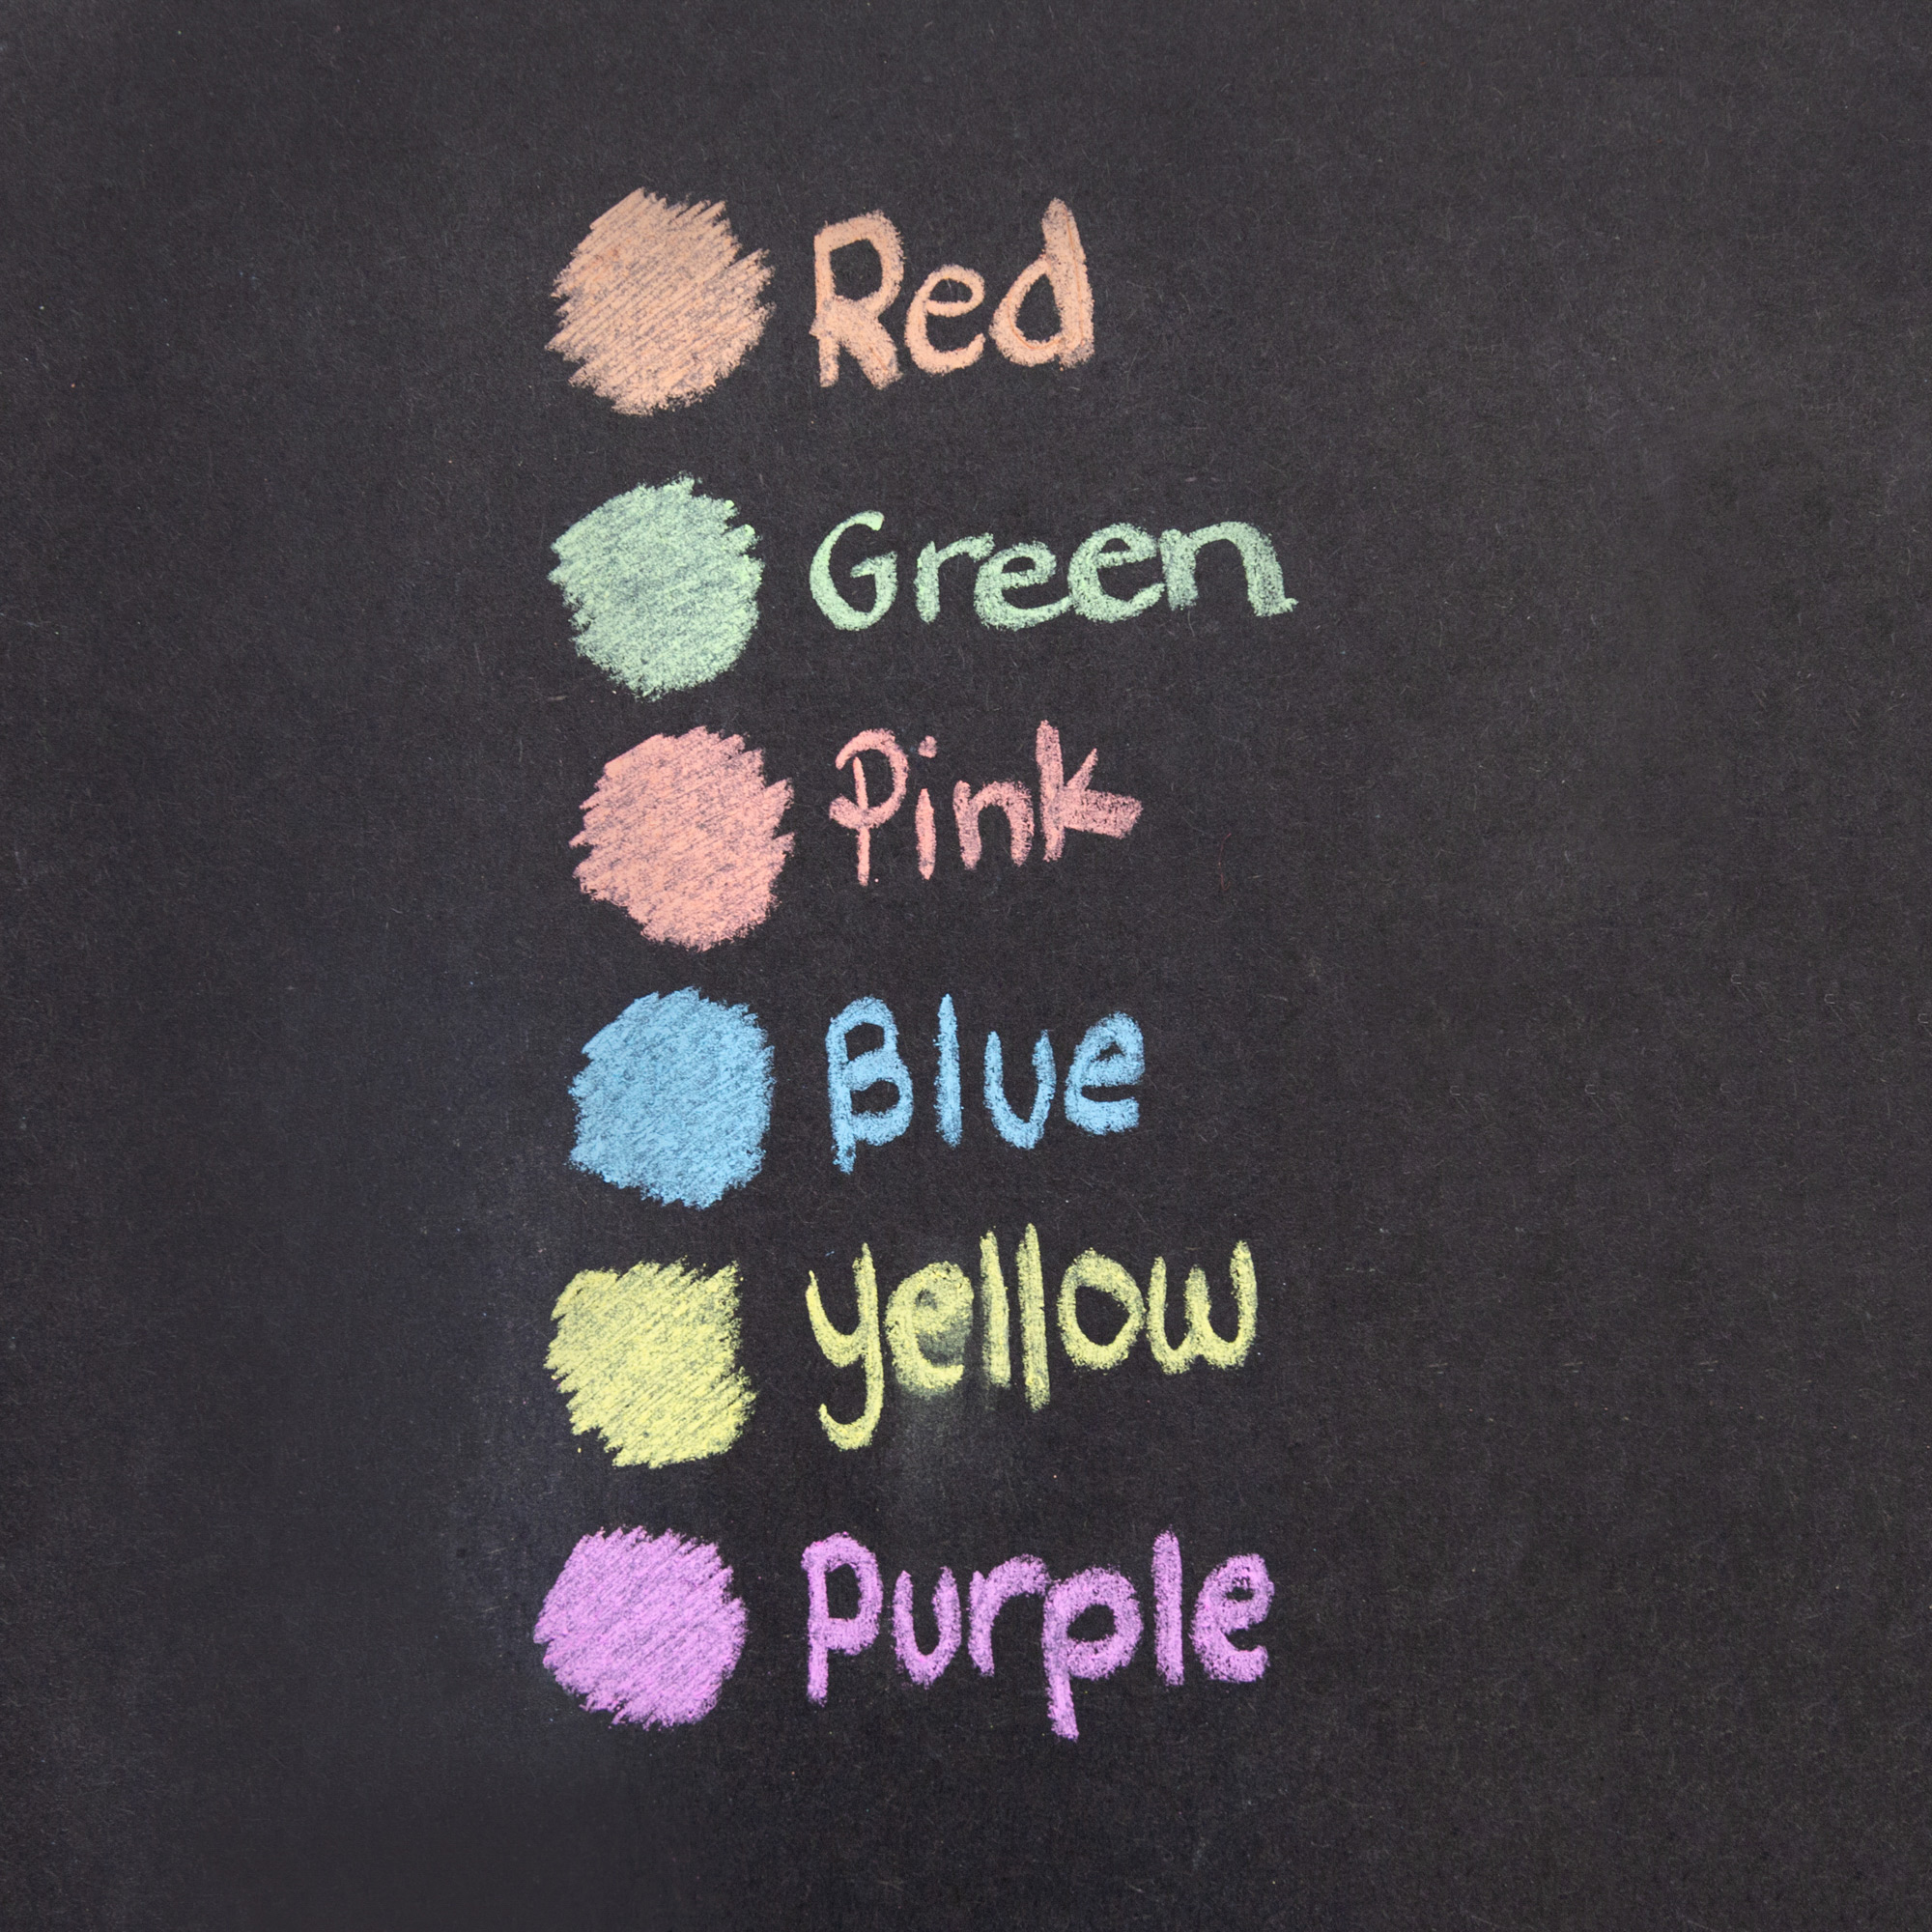 BAZIC Chalk Set, Colored (12 Pcs) + White (12 Pcs) Chalks + Chalkboard  Eraser, Non-Toxic Kids Art Office School Blackboard Home, 2-Pack